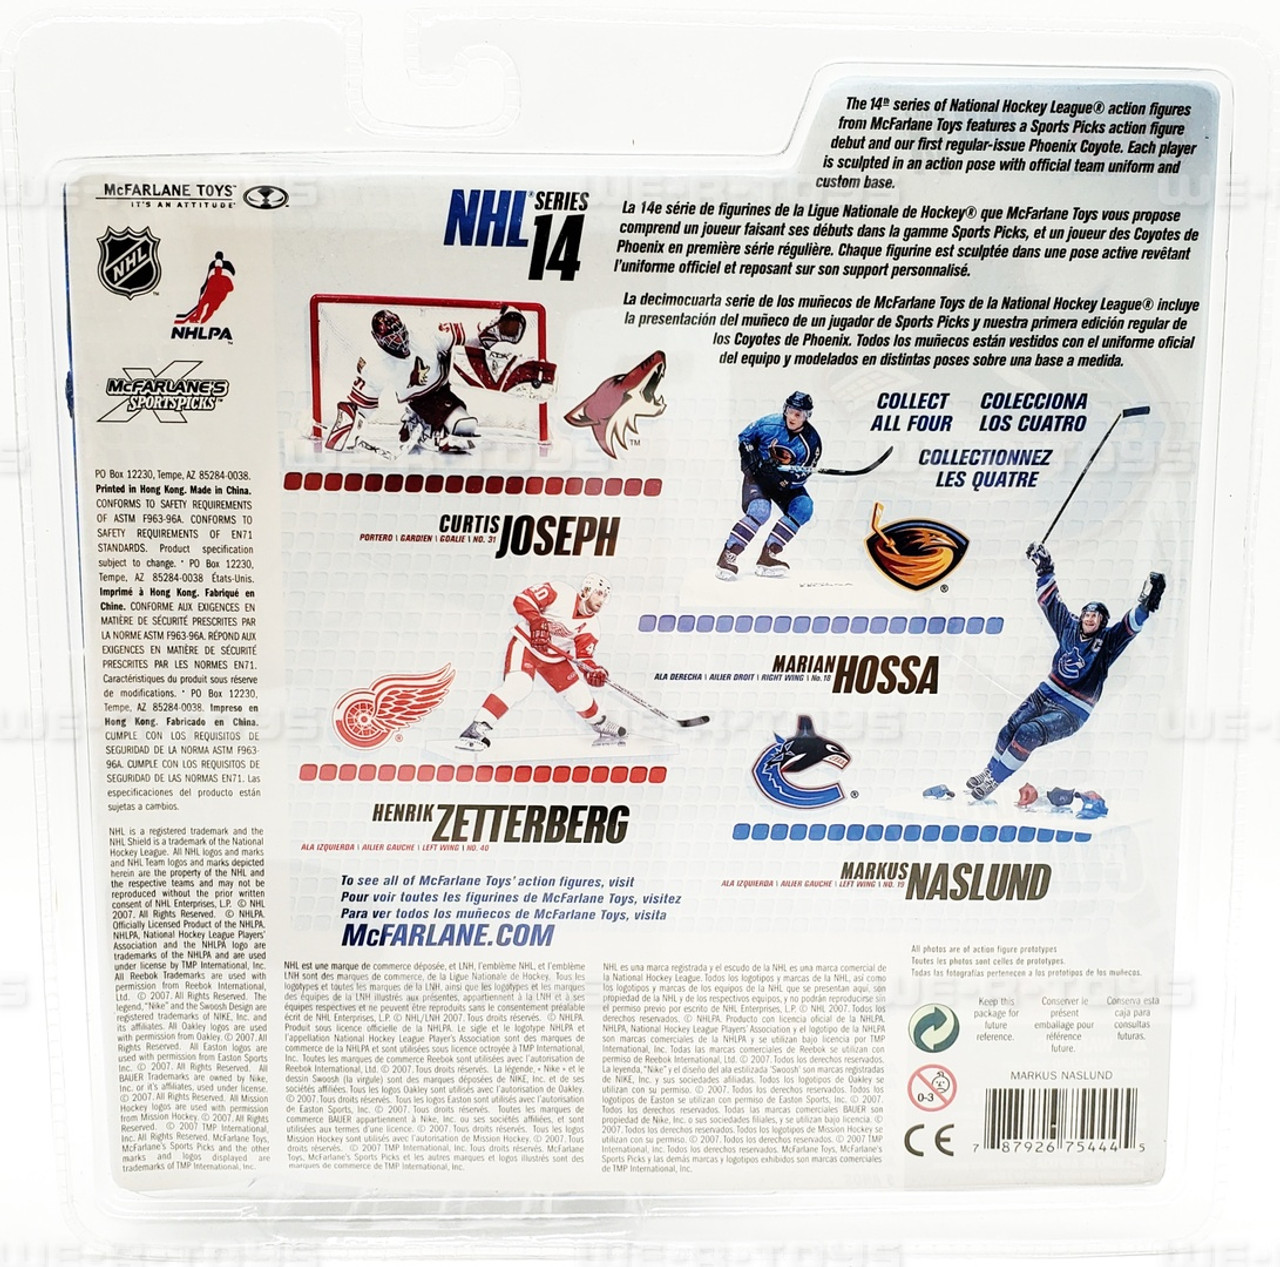 NHL Vancouver Canucks #19 Markus Naslund Action Figure McFarlane Toys 2003  NEW - We-R-Toys